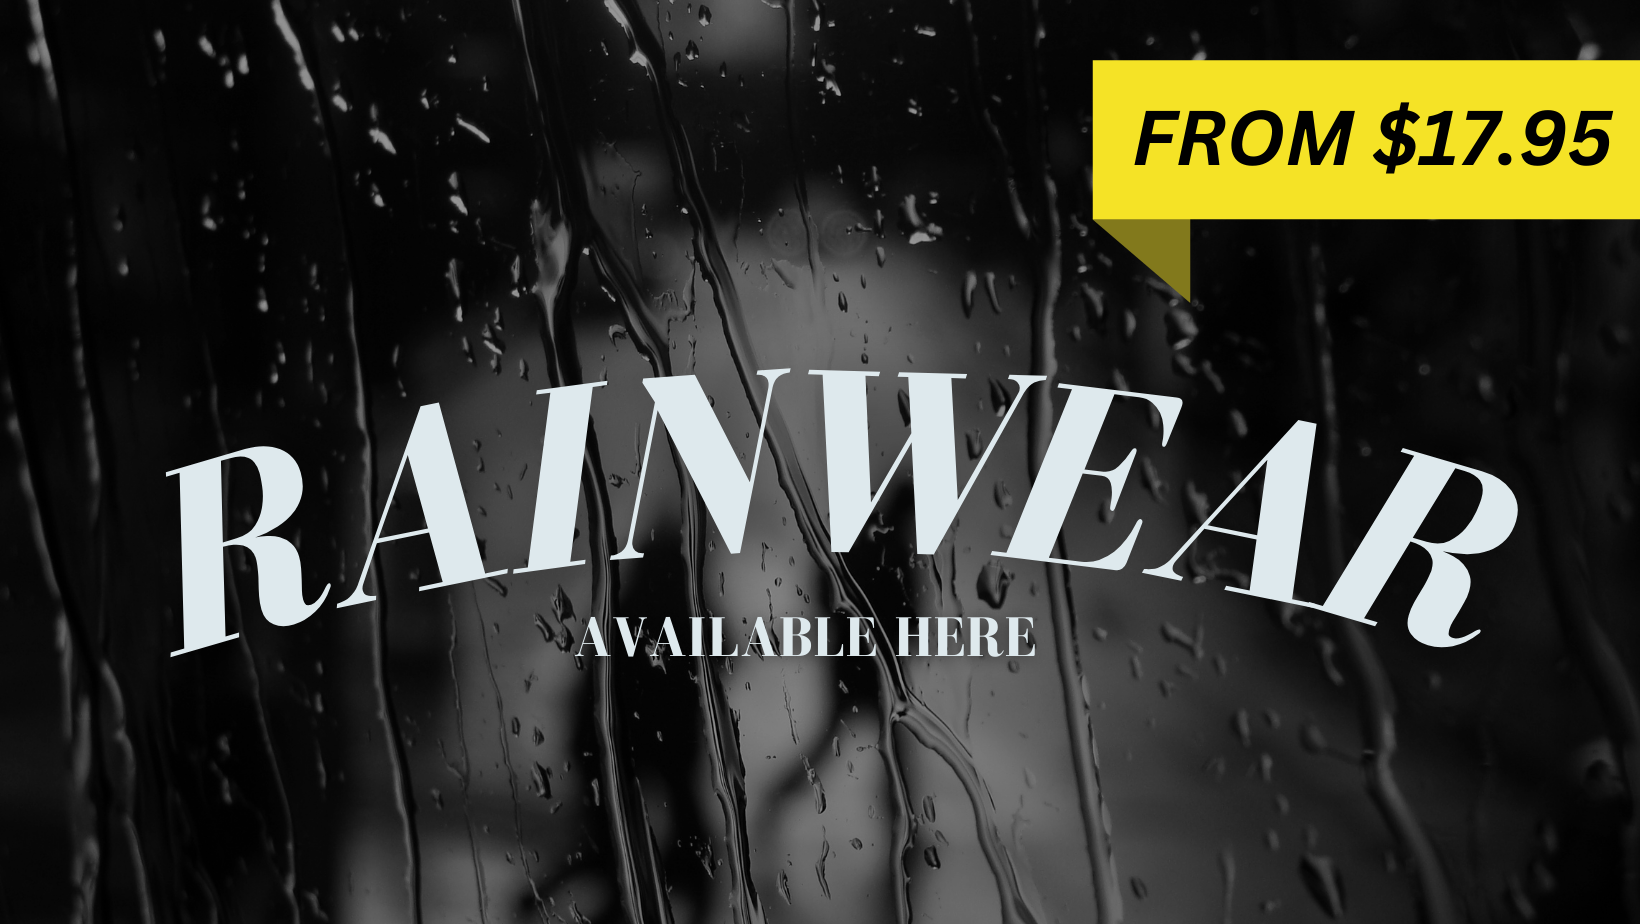 Rainwear - Available here